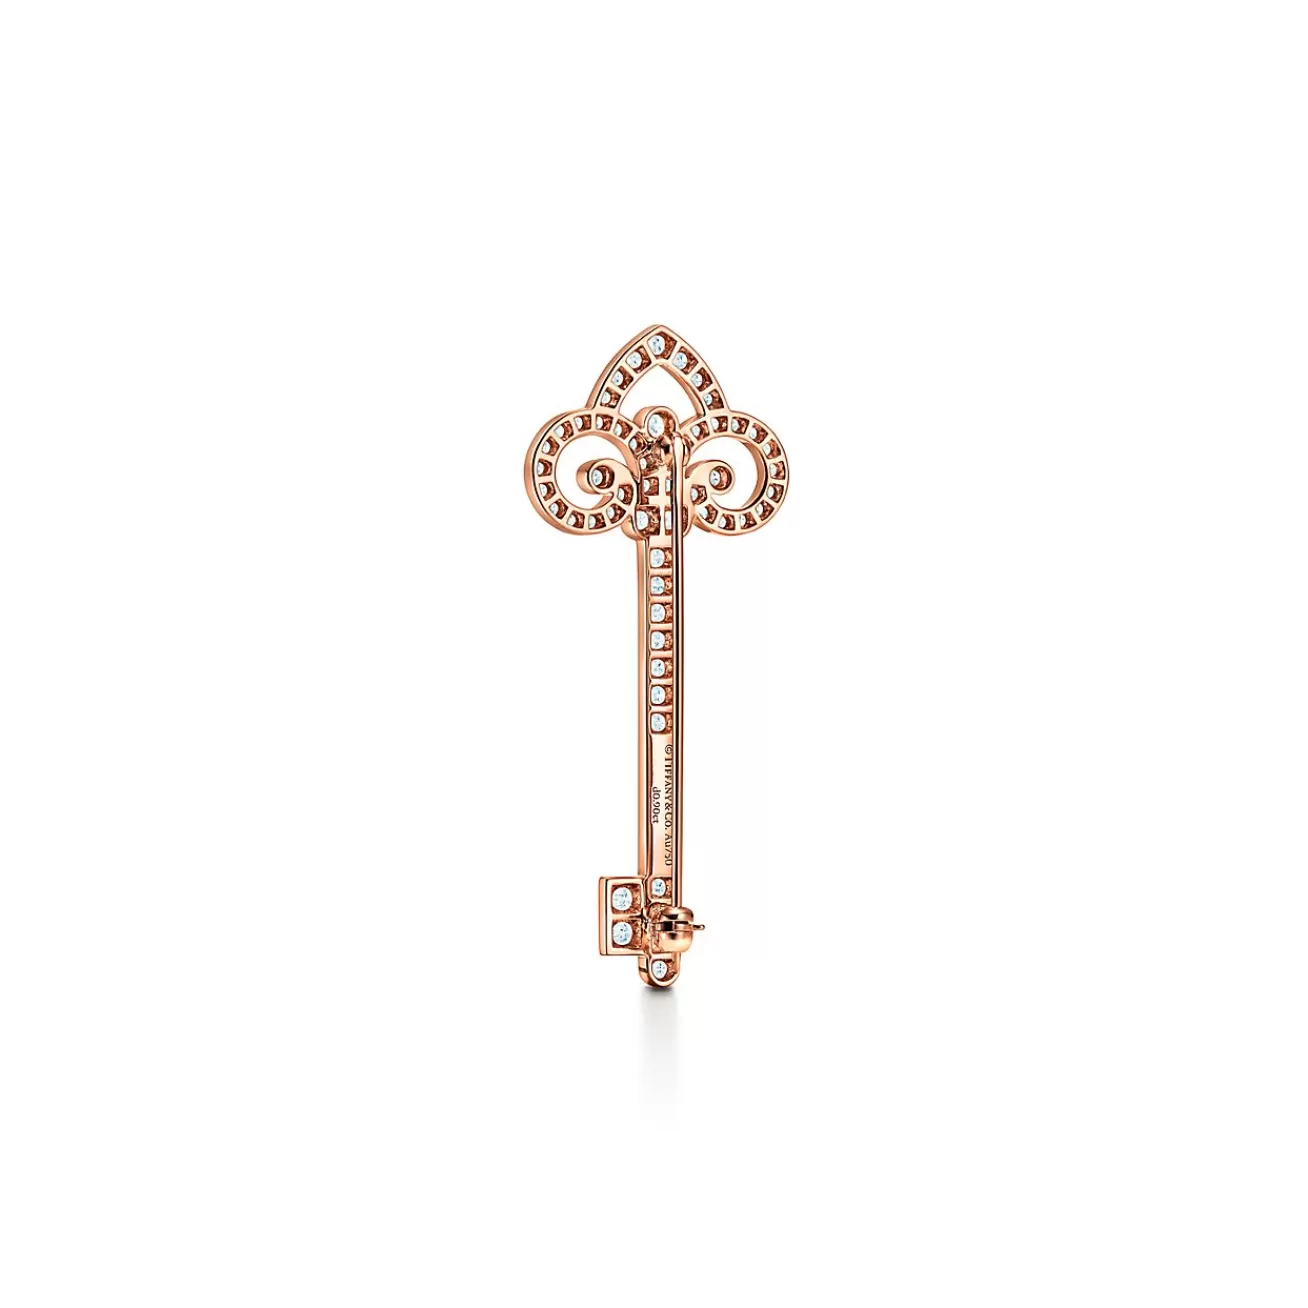 Tiffany & Co. Tiffany Keys Fleur de Lis Key Brooch in Rose Gold with Diamonds | ^ Brooches | Rose Gold Jewelry